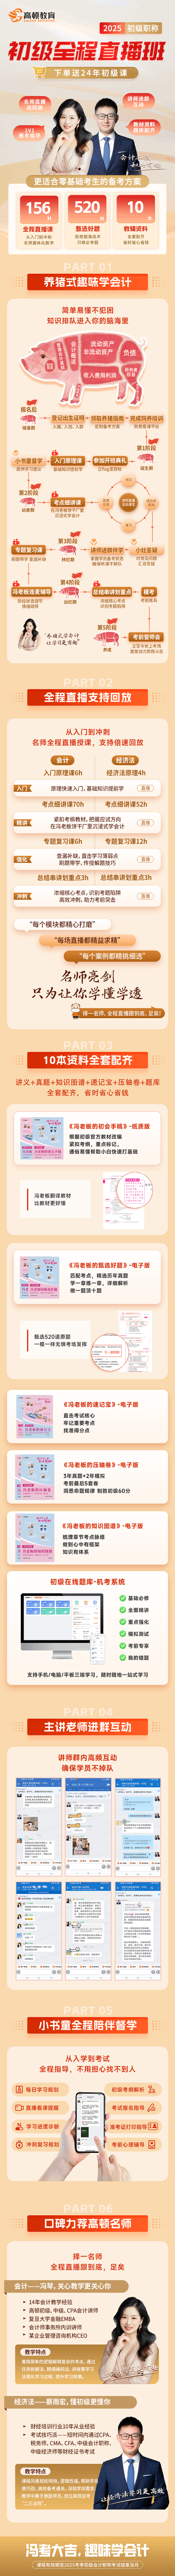 http://simg01.gaodunwangxiao.com/uploadfiles/product-center/202406/21/ddaf2_20240621174947.png